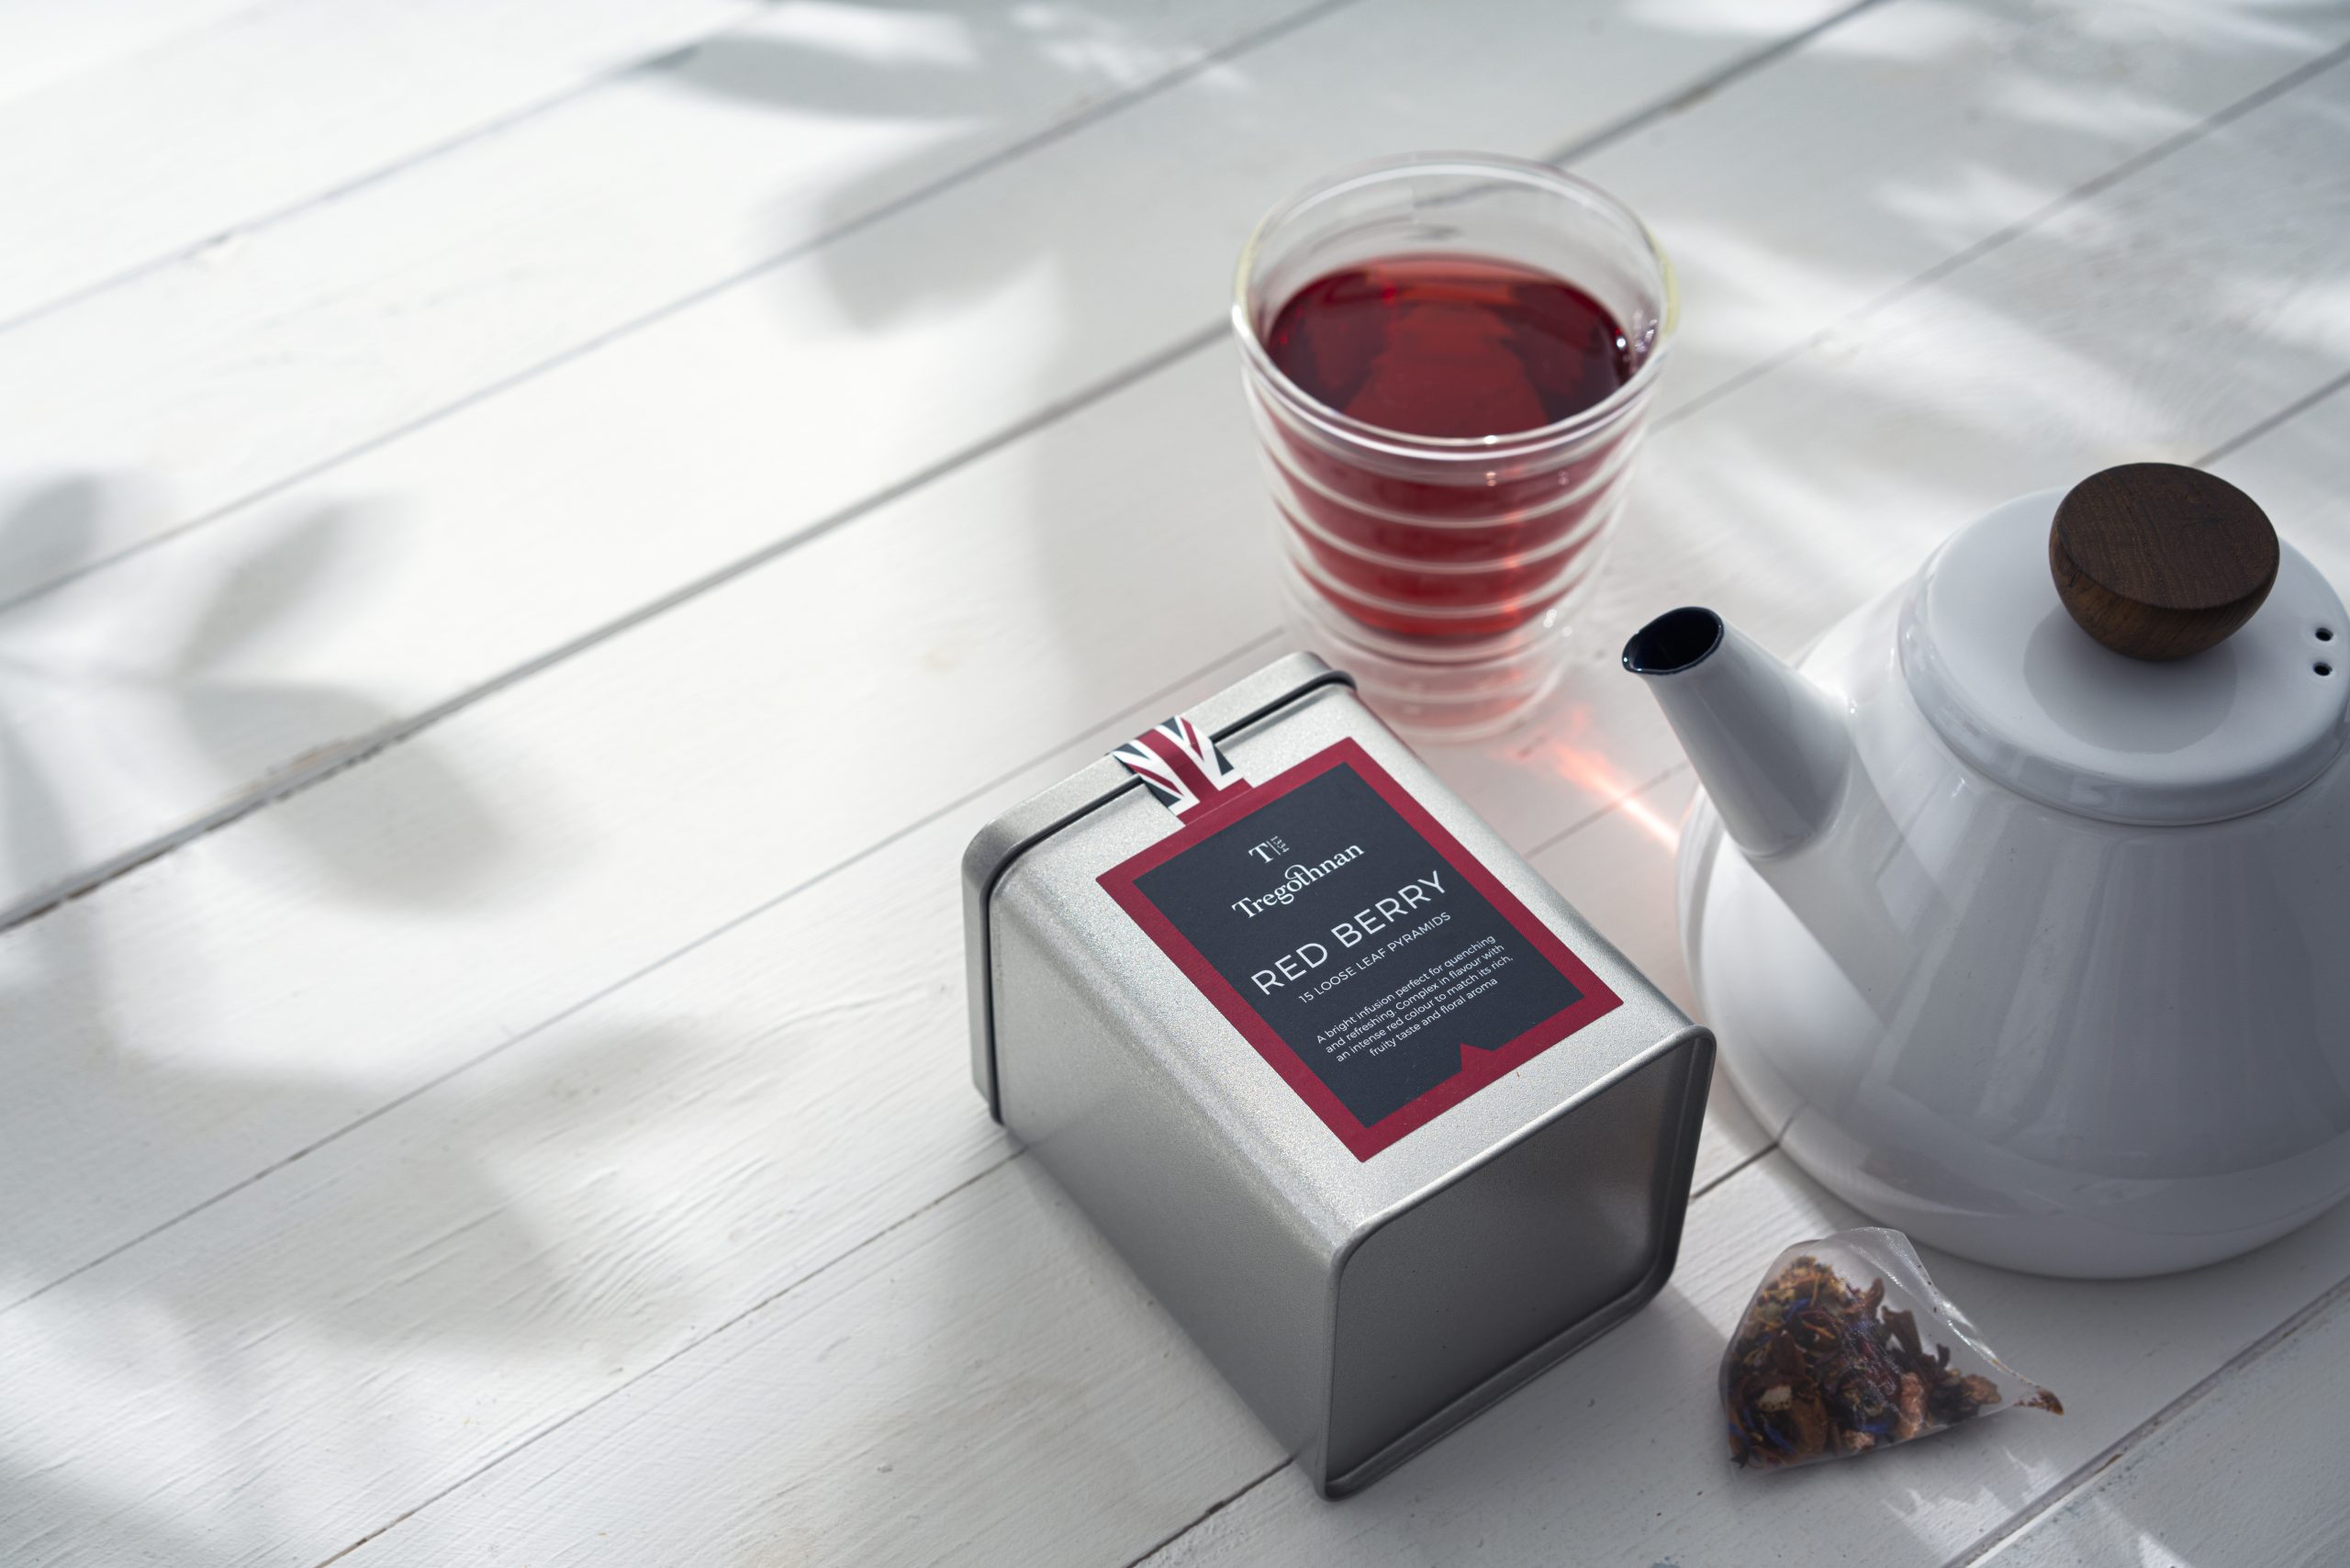 Jak parzyć herbatę Tregothnan Red Berry?